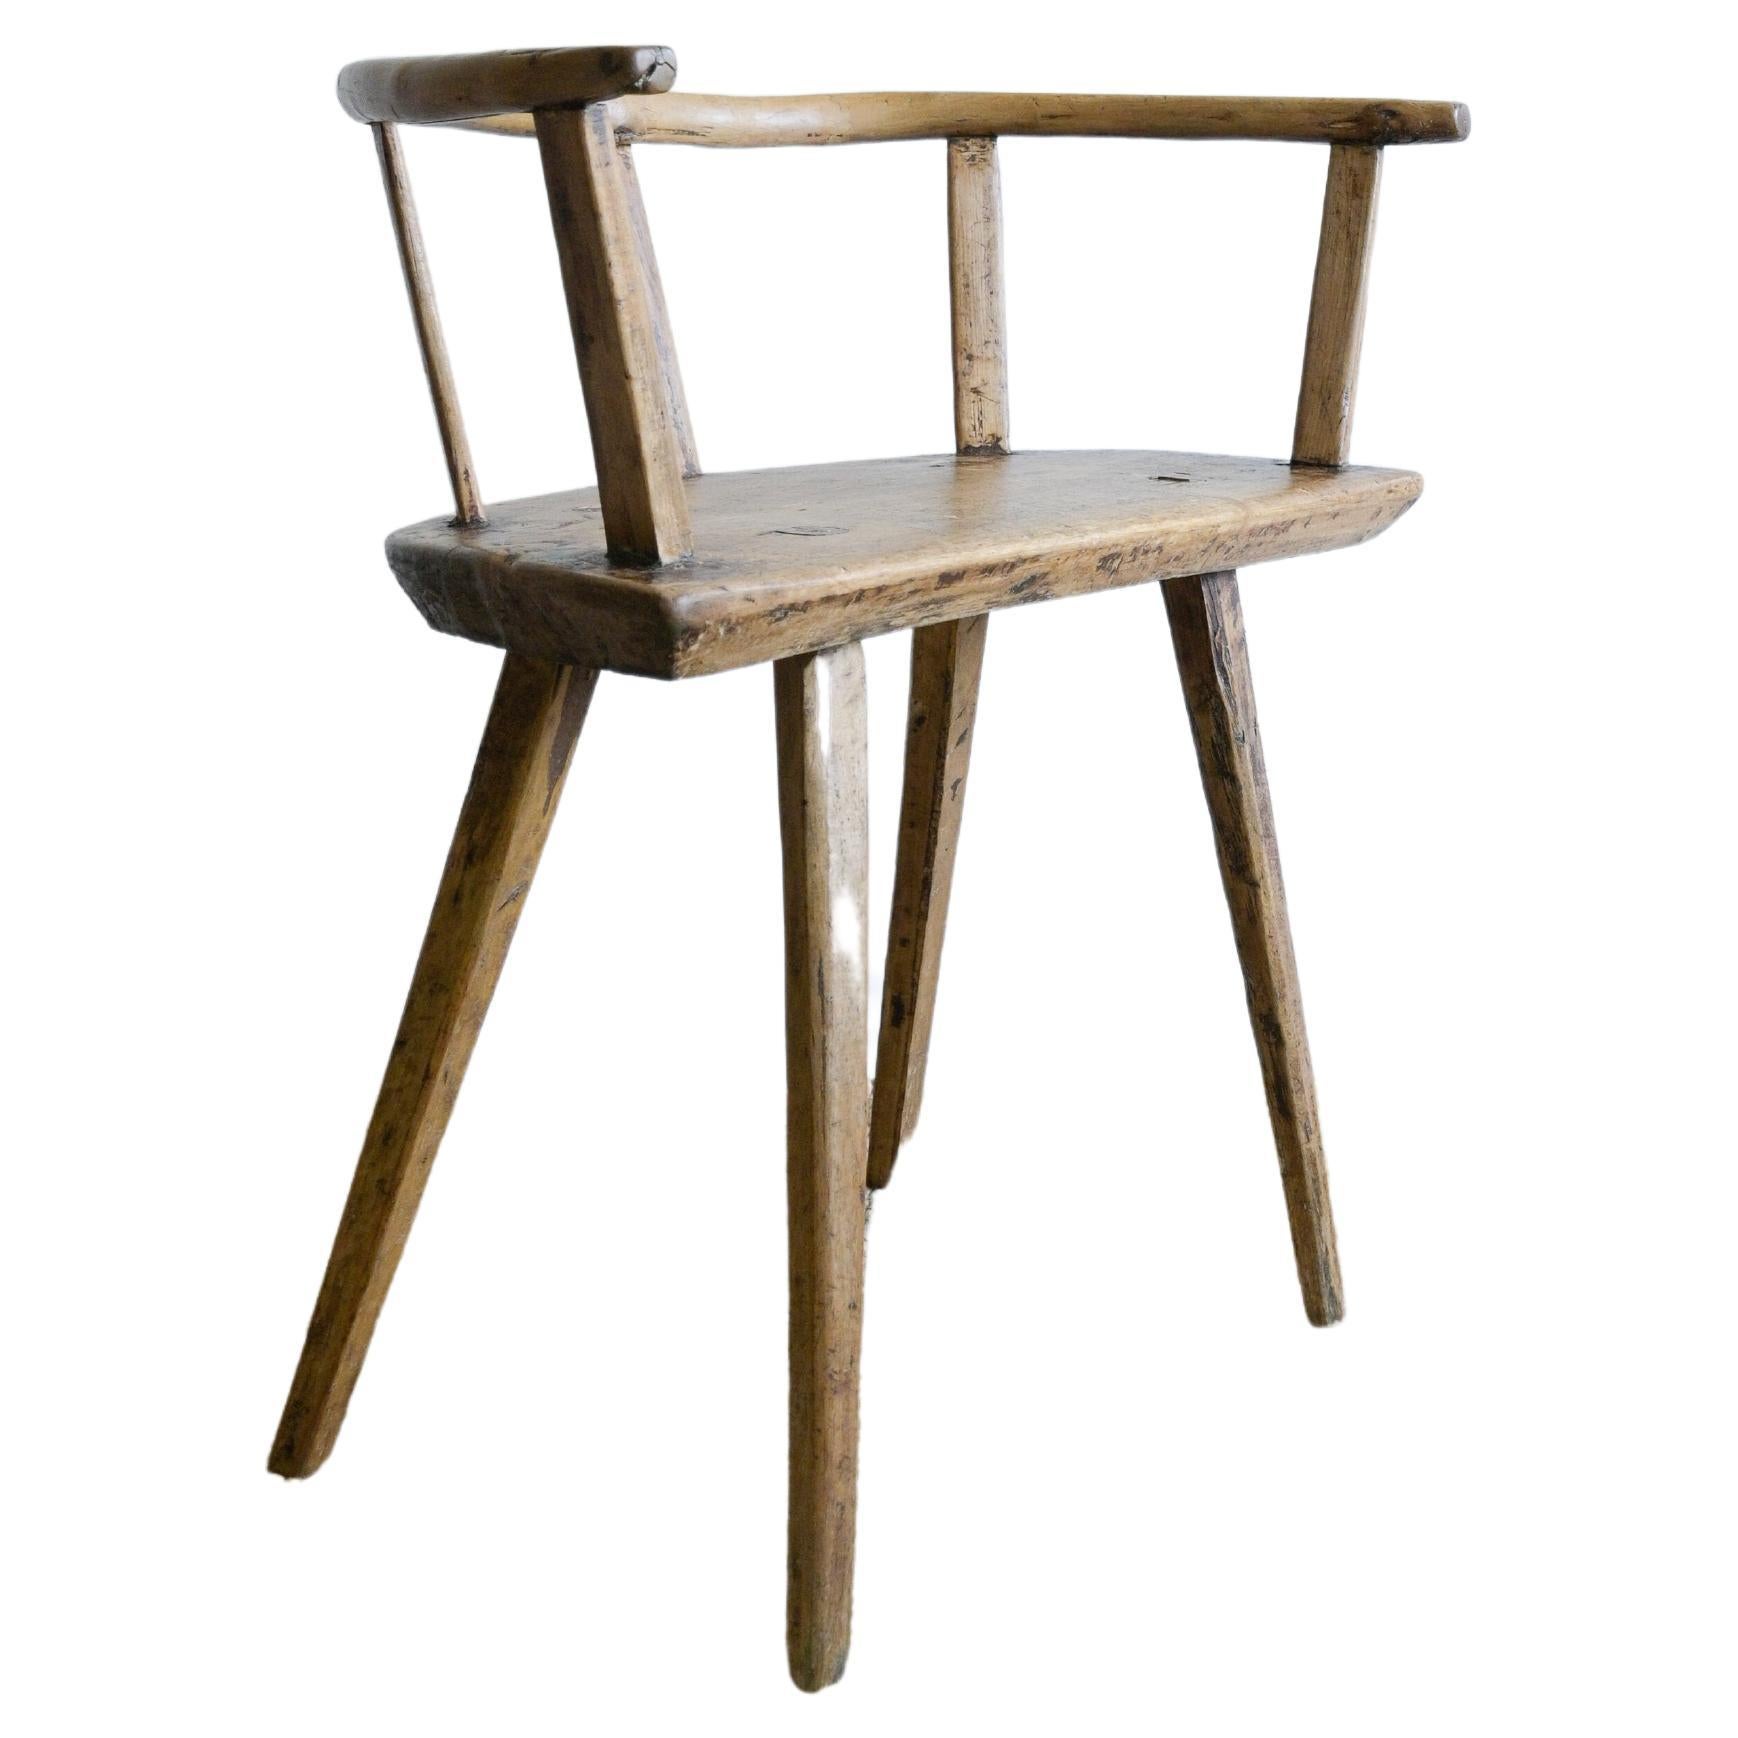 Norwegian Folk Art Chair 'Spinnastol' circa 1850 For Sale